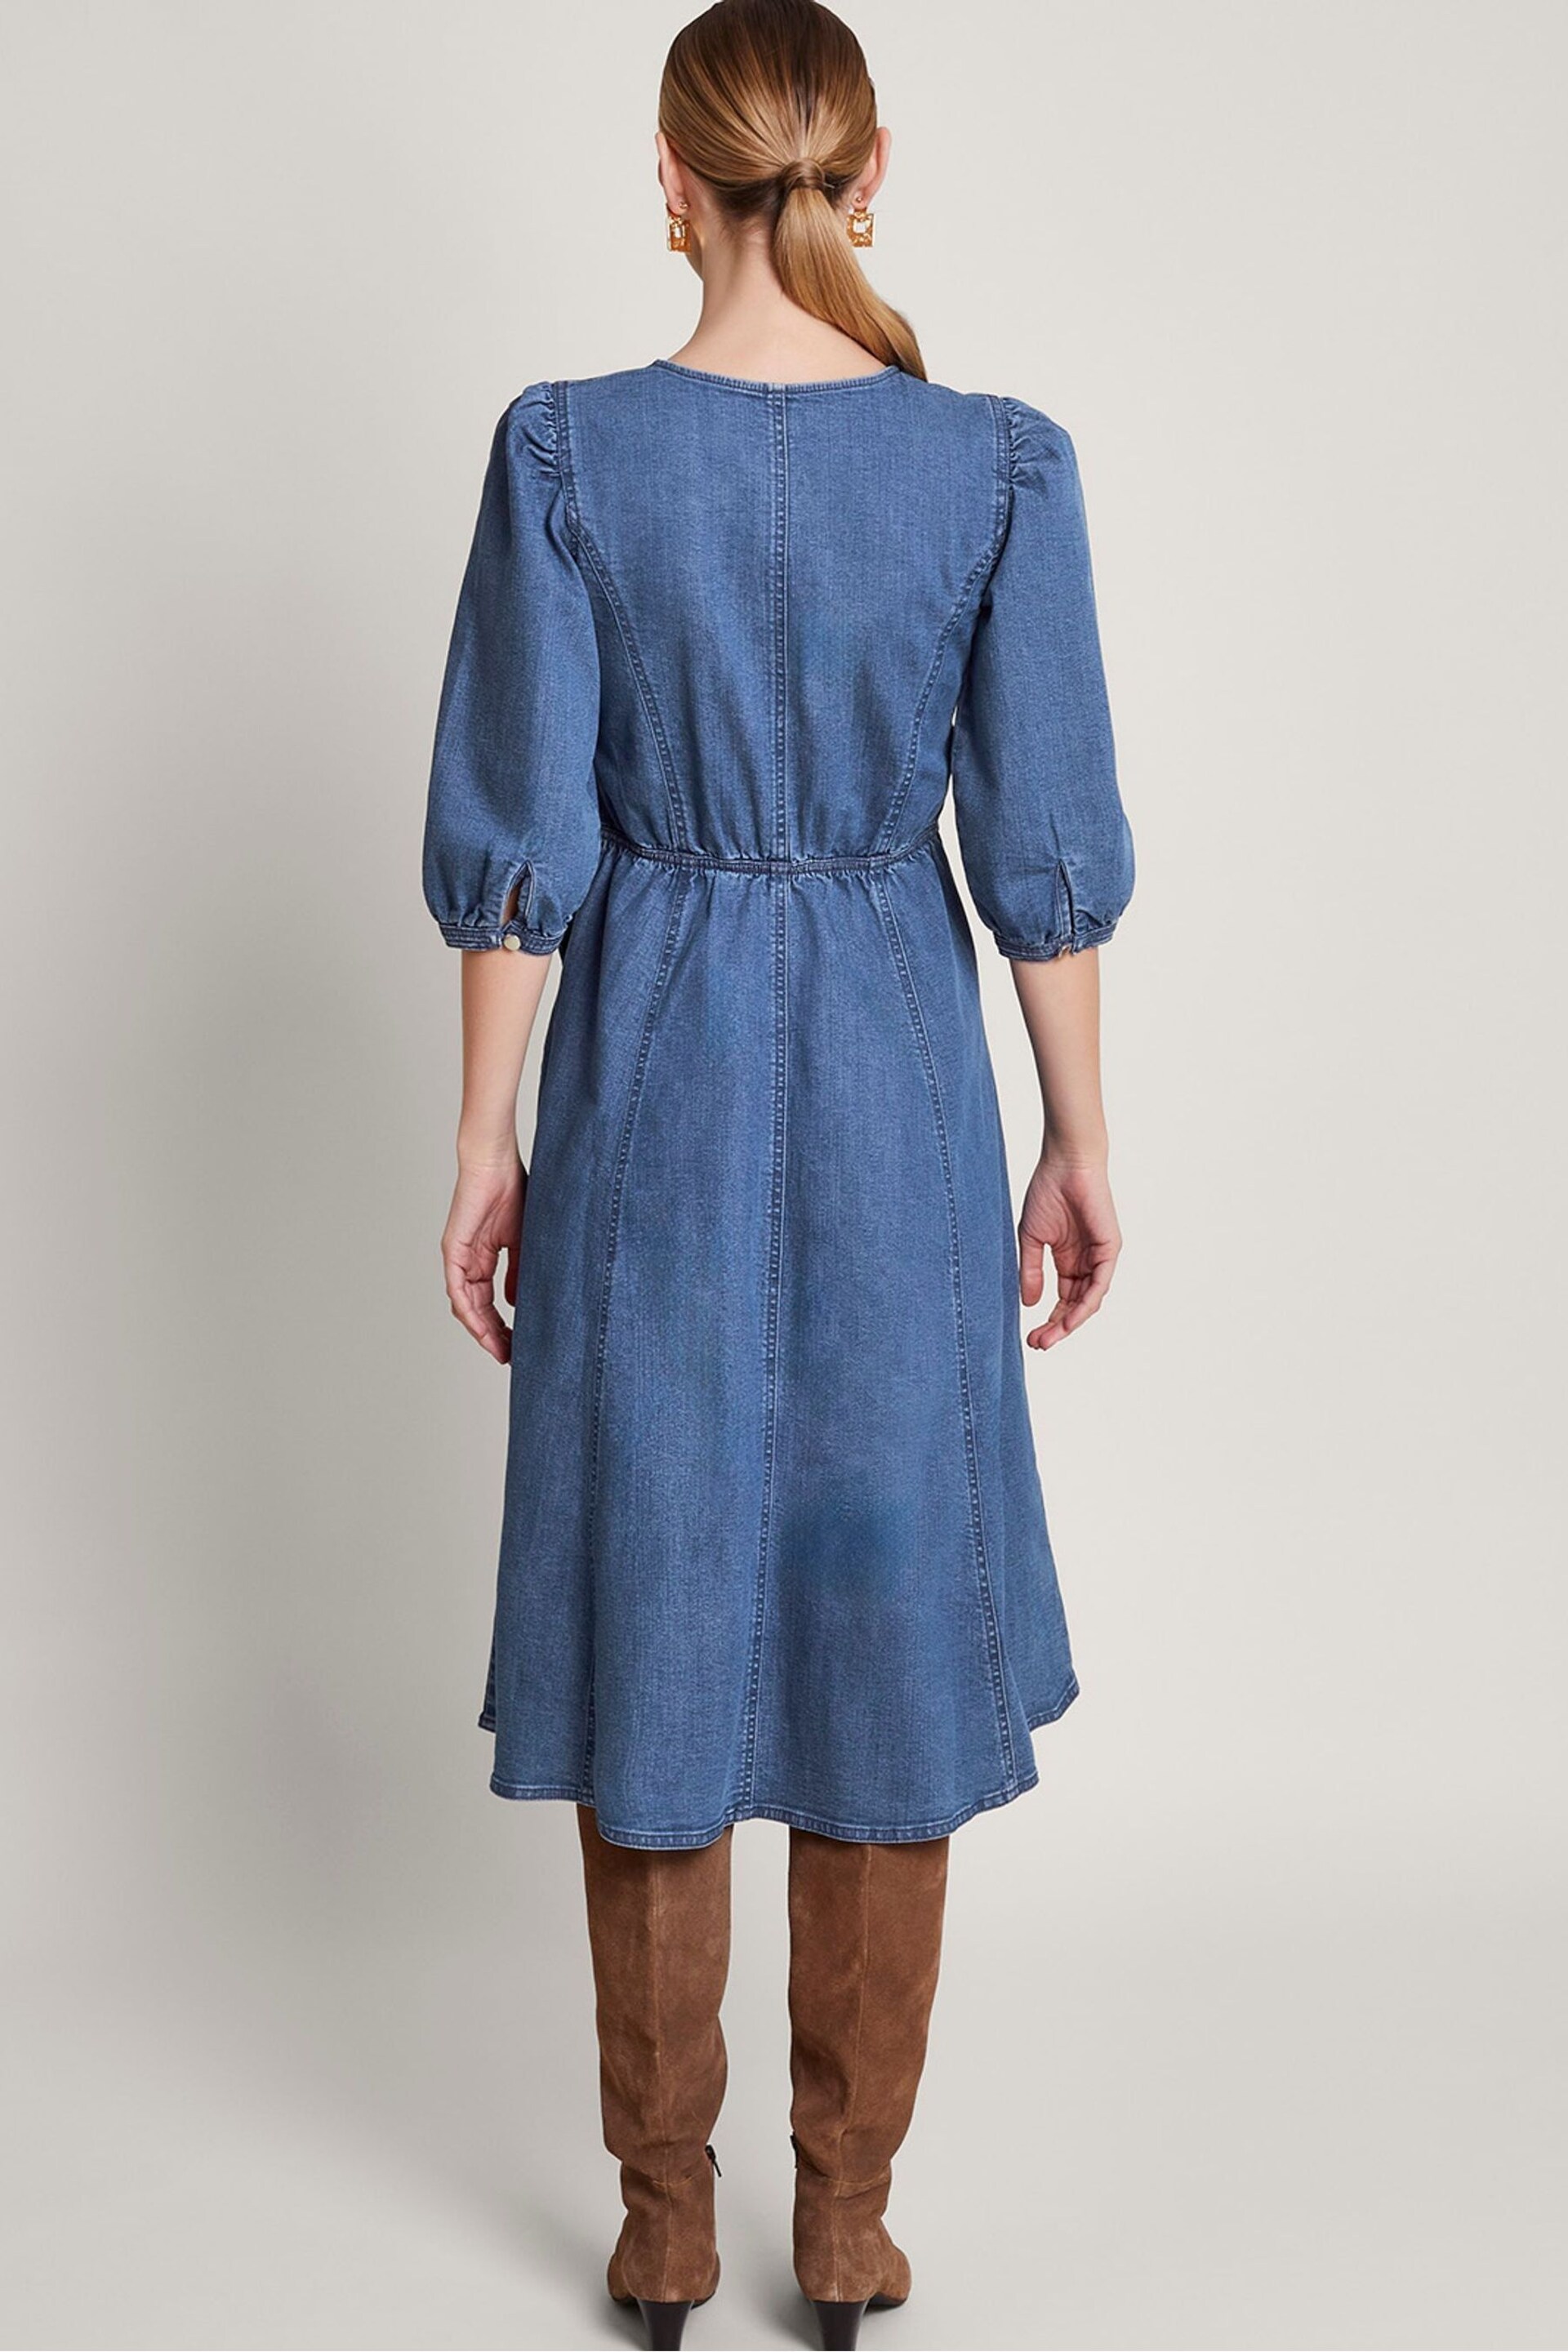 Monsoon Blue Kaia Cornelli Dress - Image 4 of 6